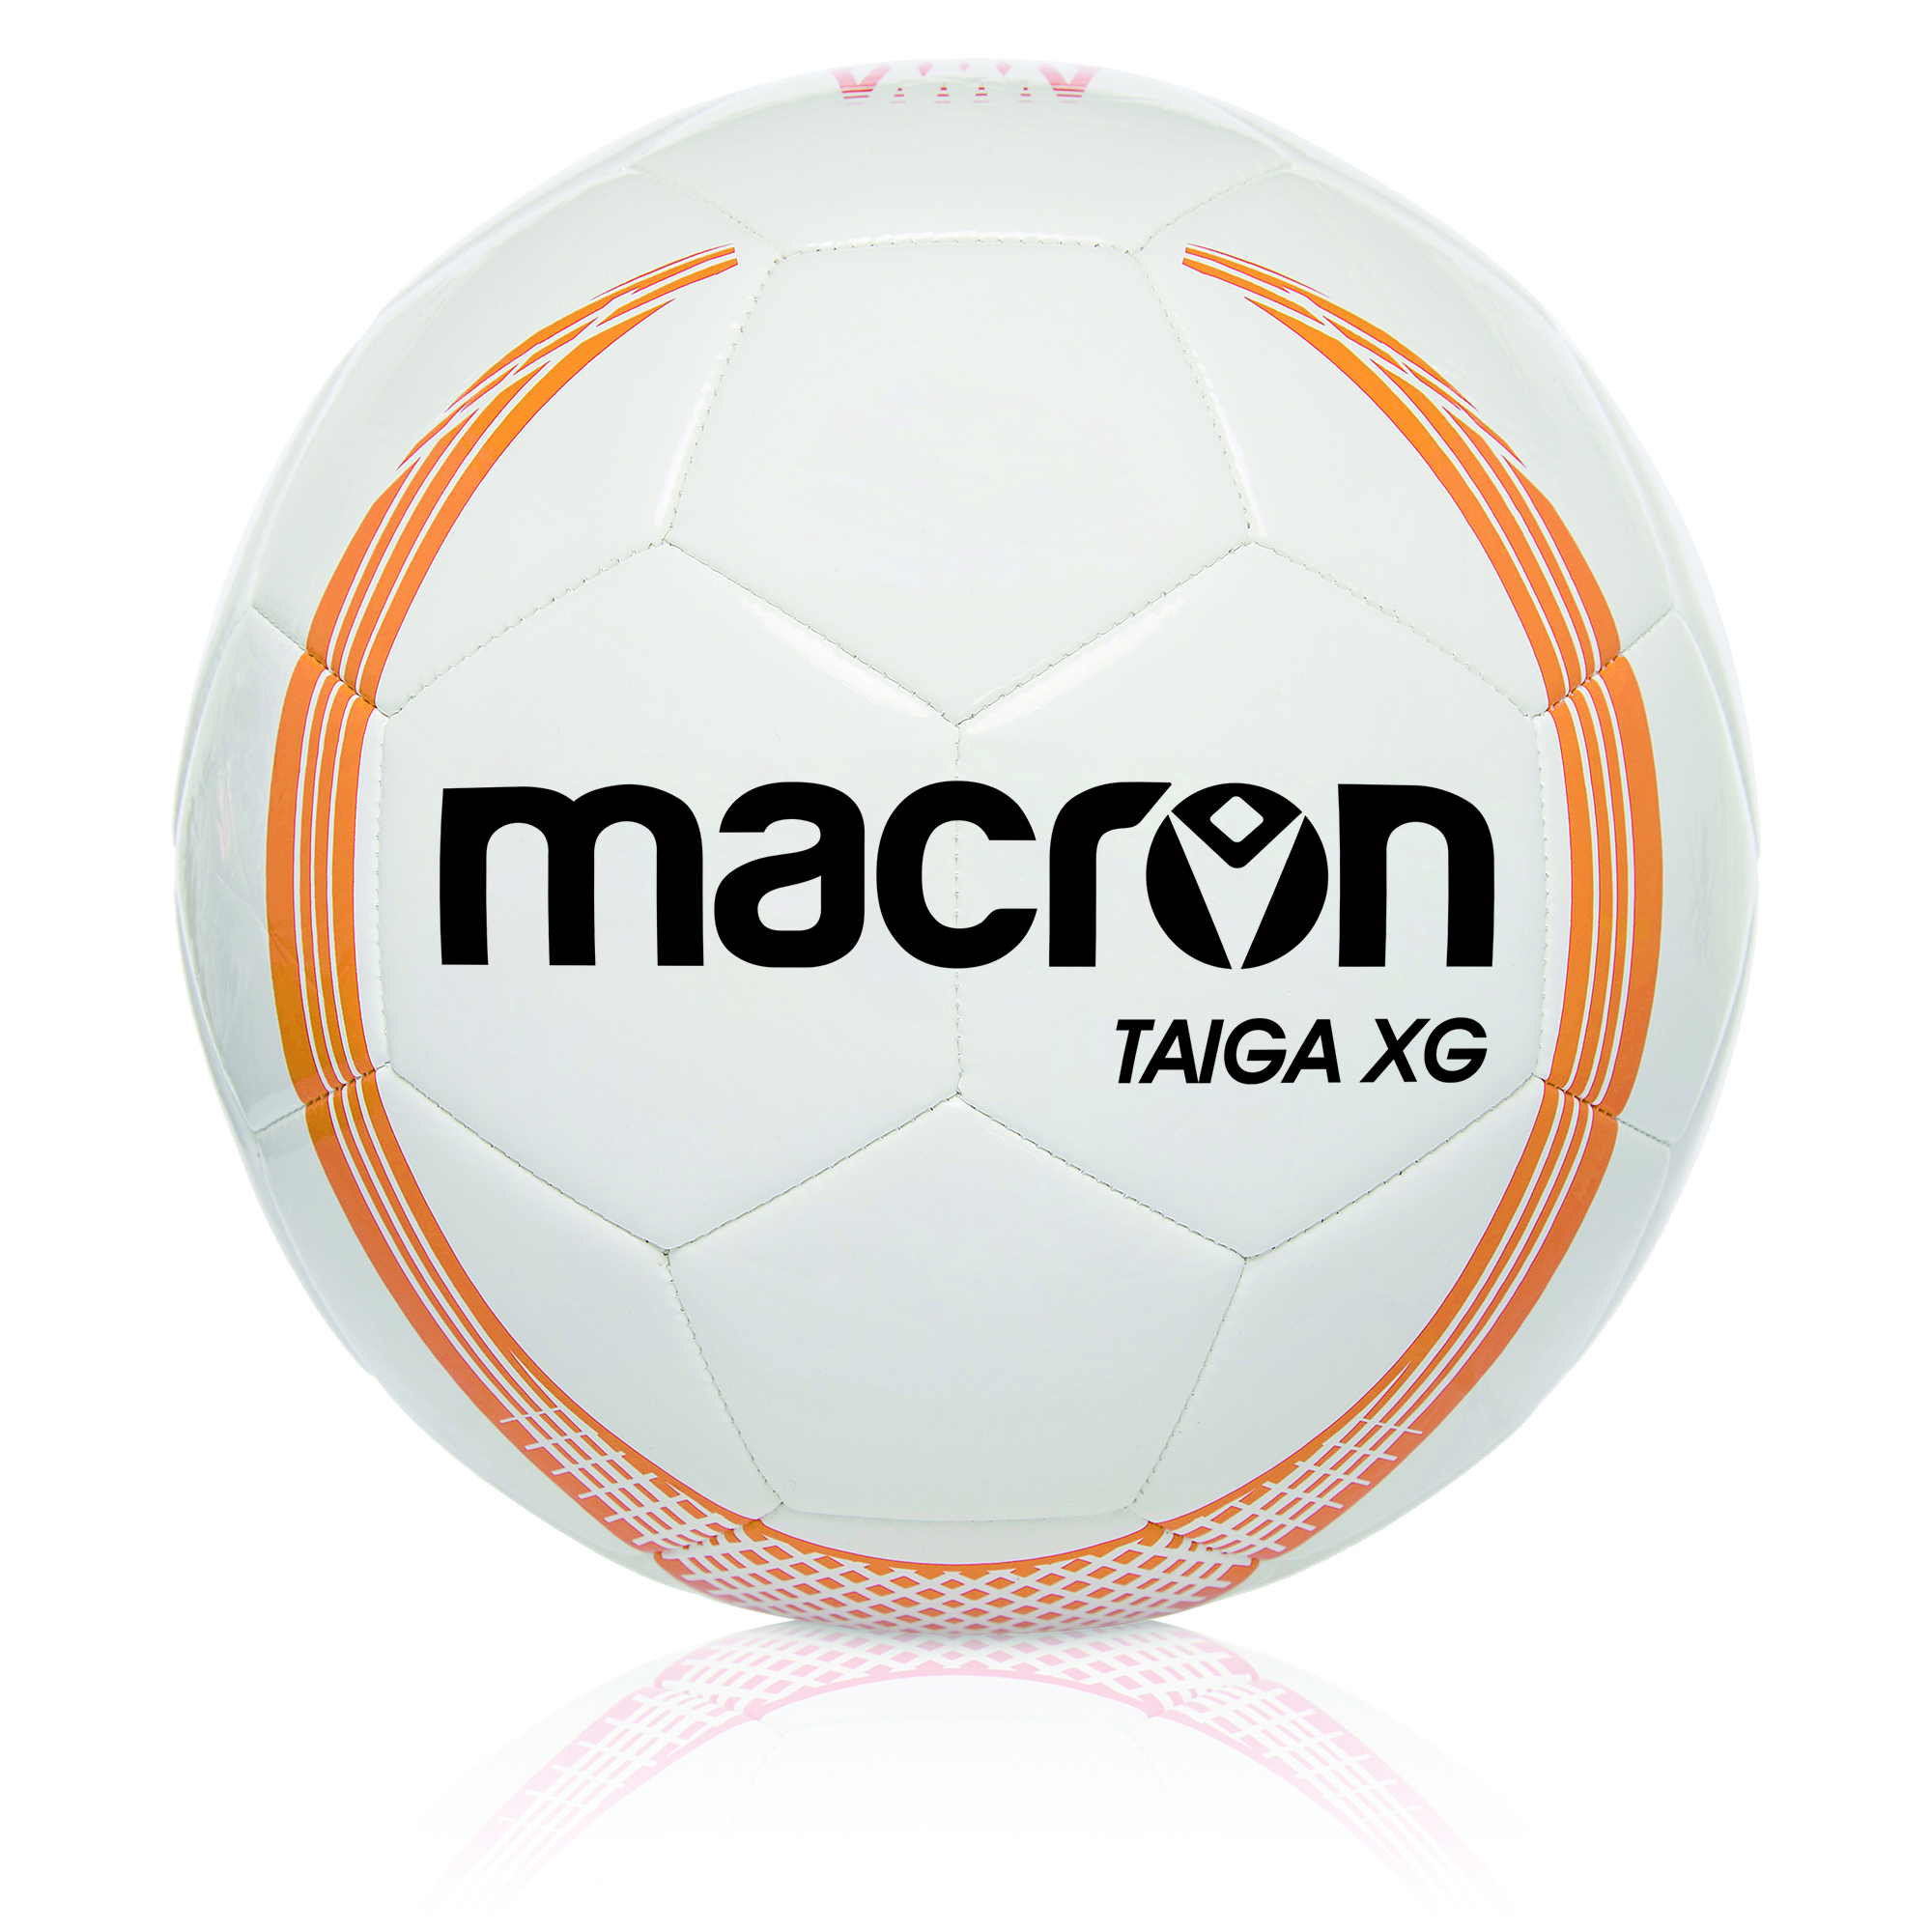 Macron Fussball Größe 3 Taiga